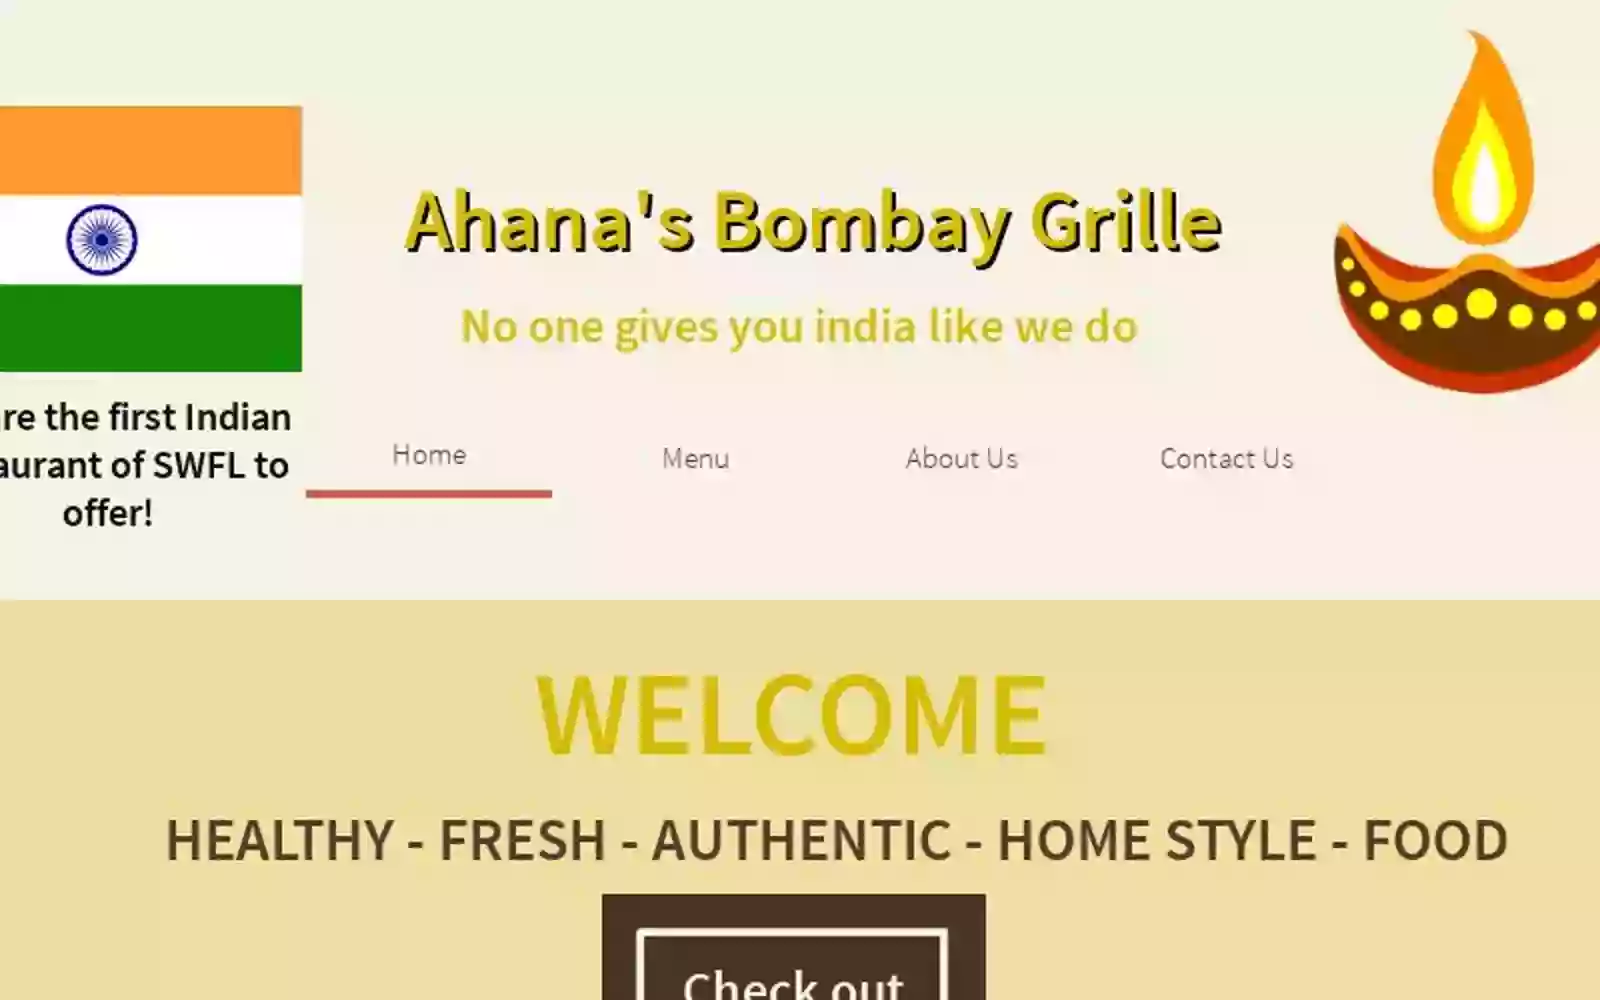 Ahana's Bombay Grille